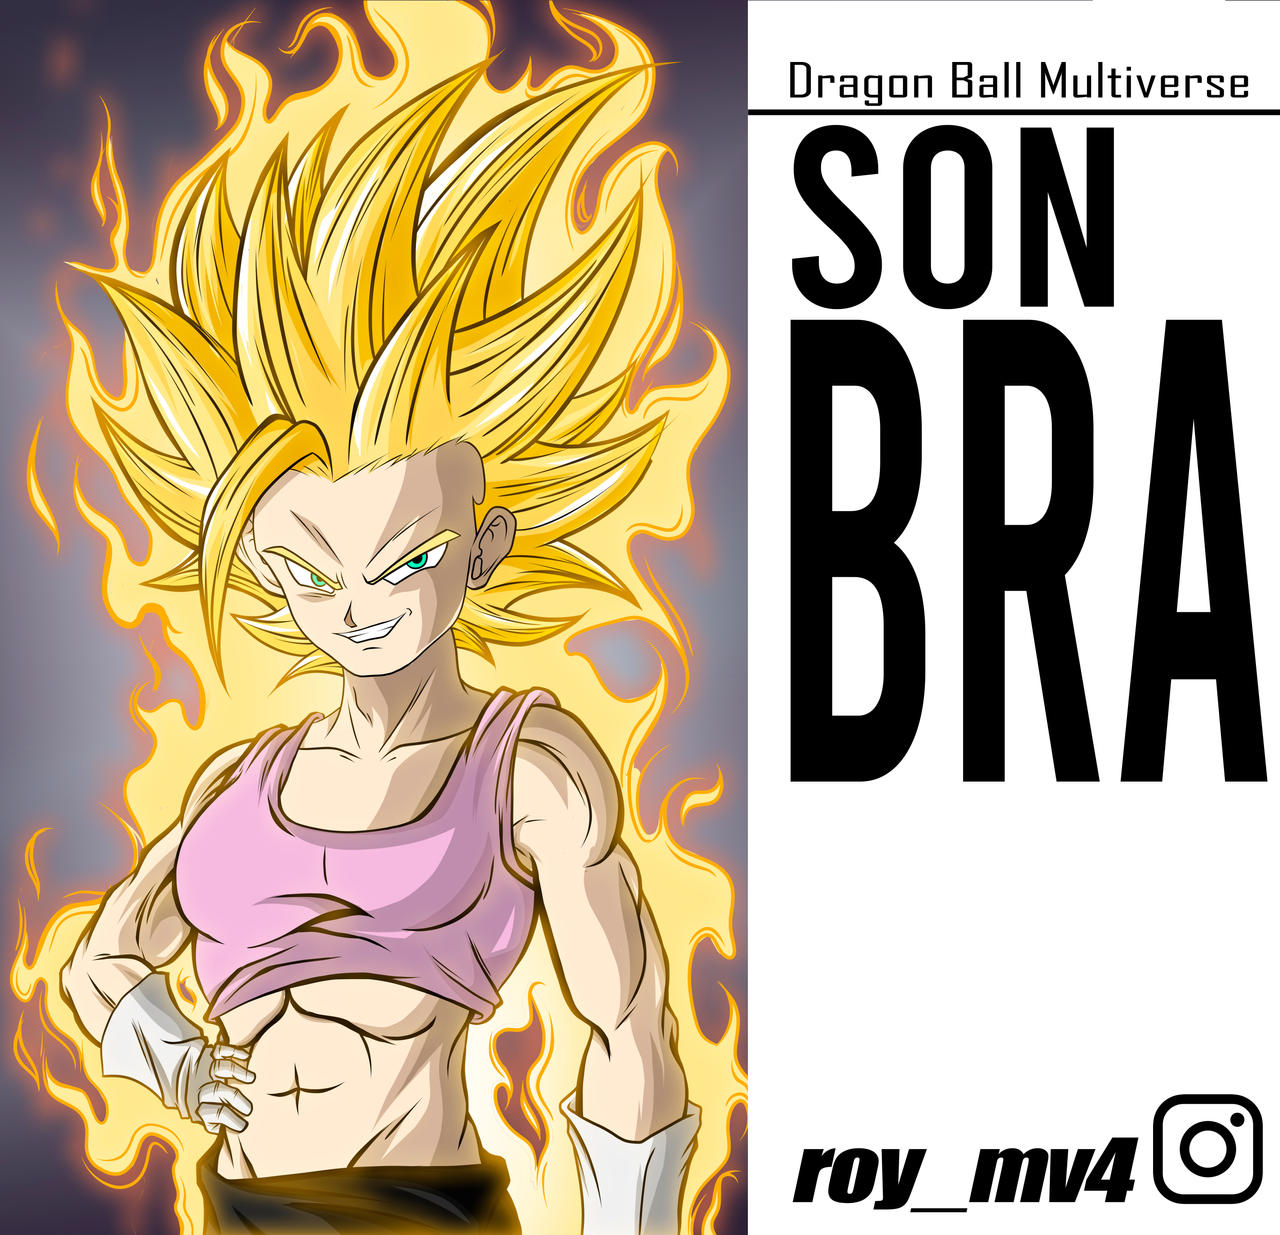 Fanart-2023-046 - Son Bra - Dragon Ball Multiverse by maitrenuage on  DeviantArt